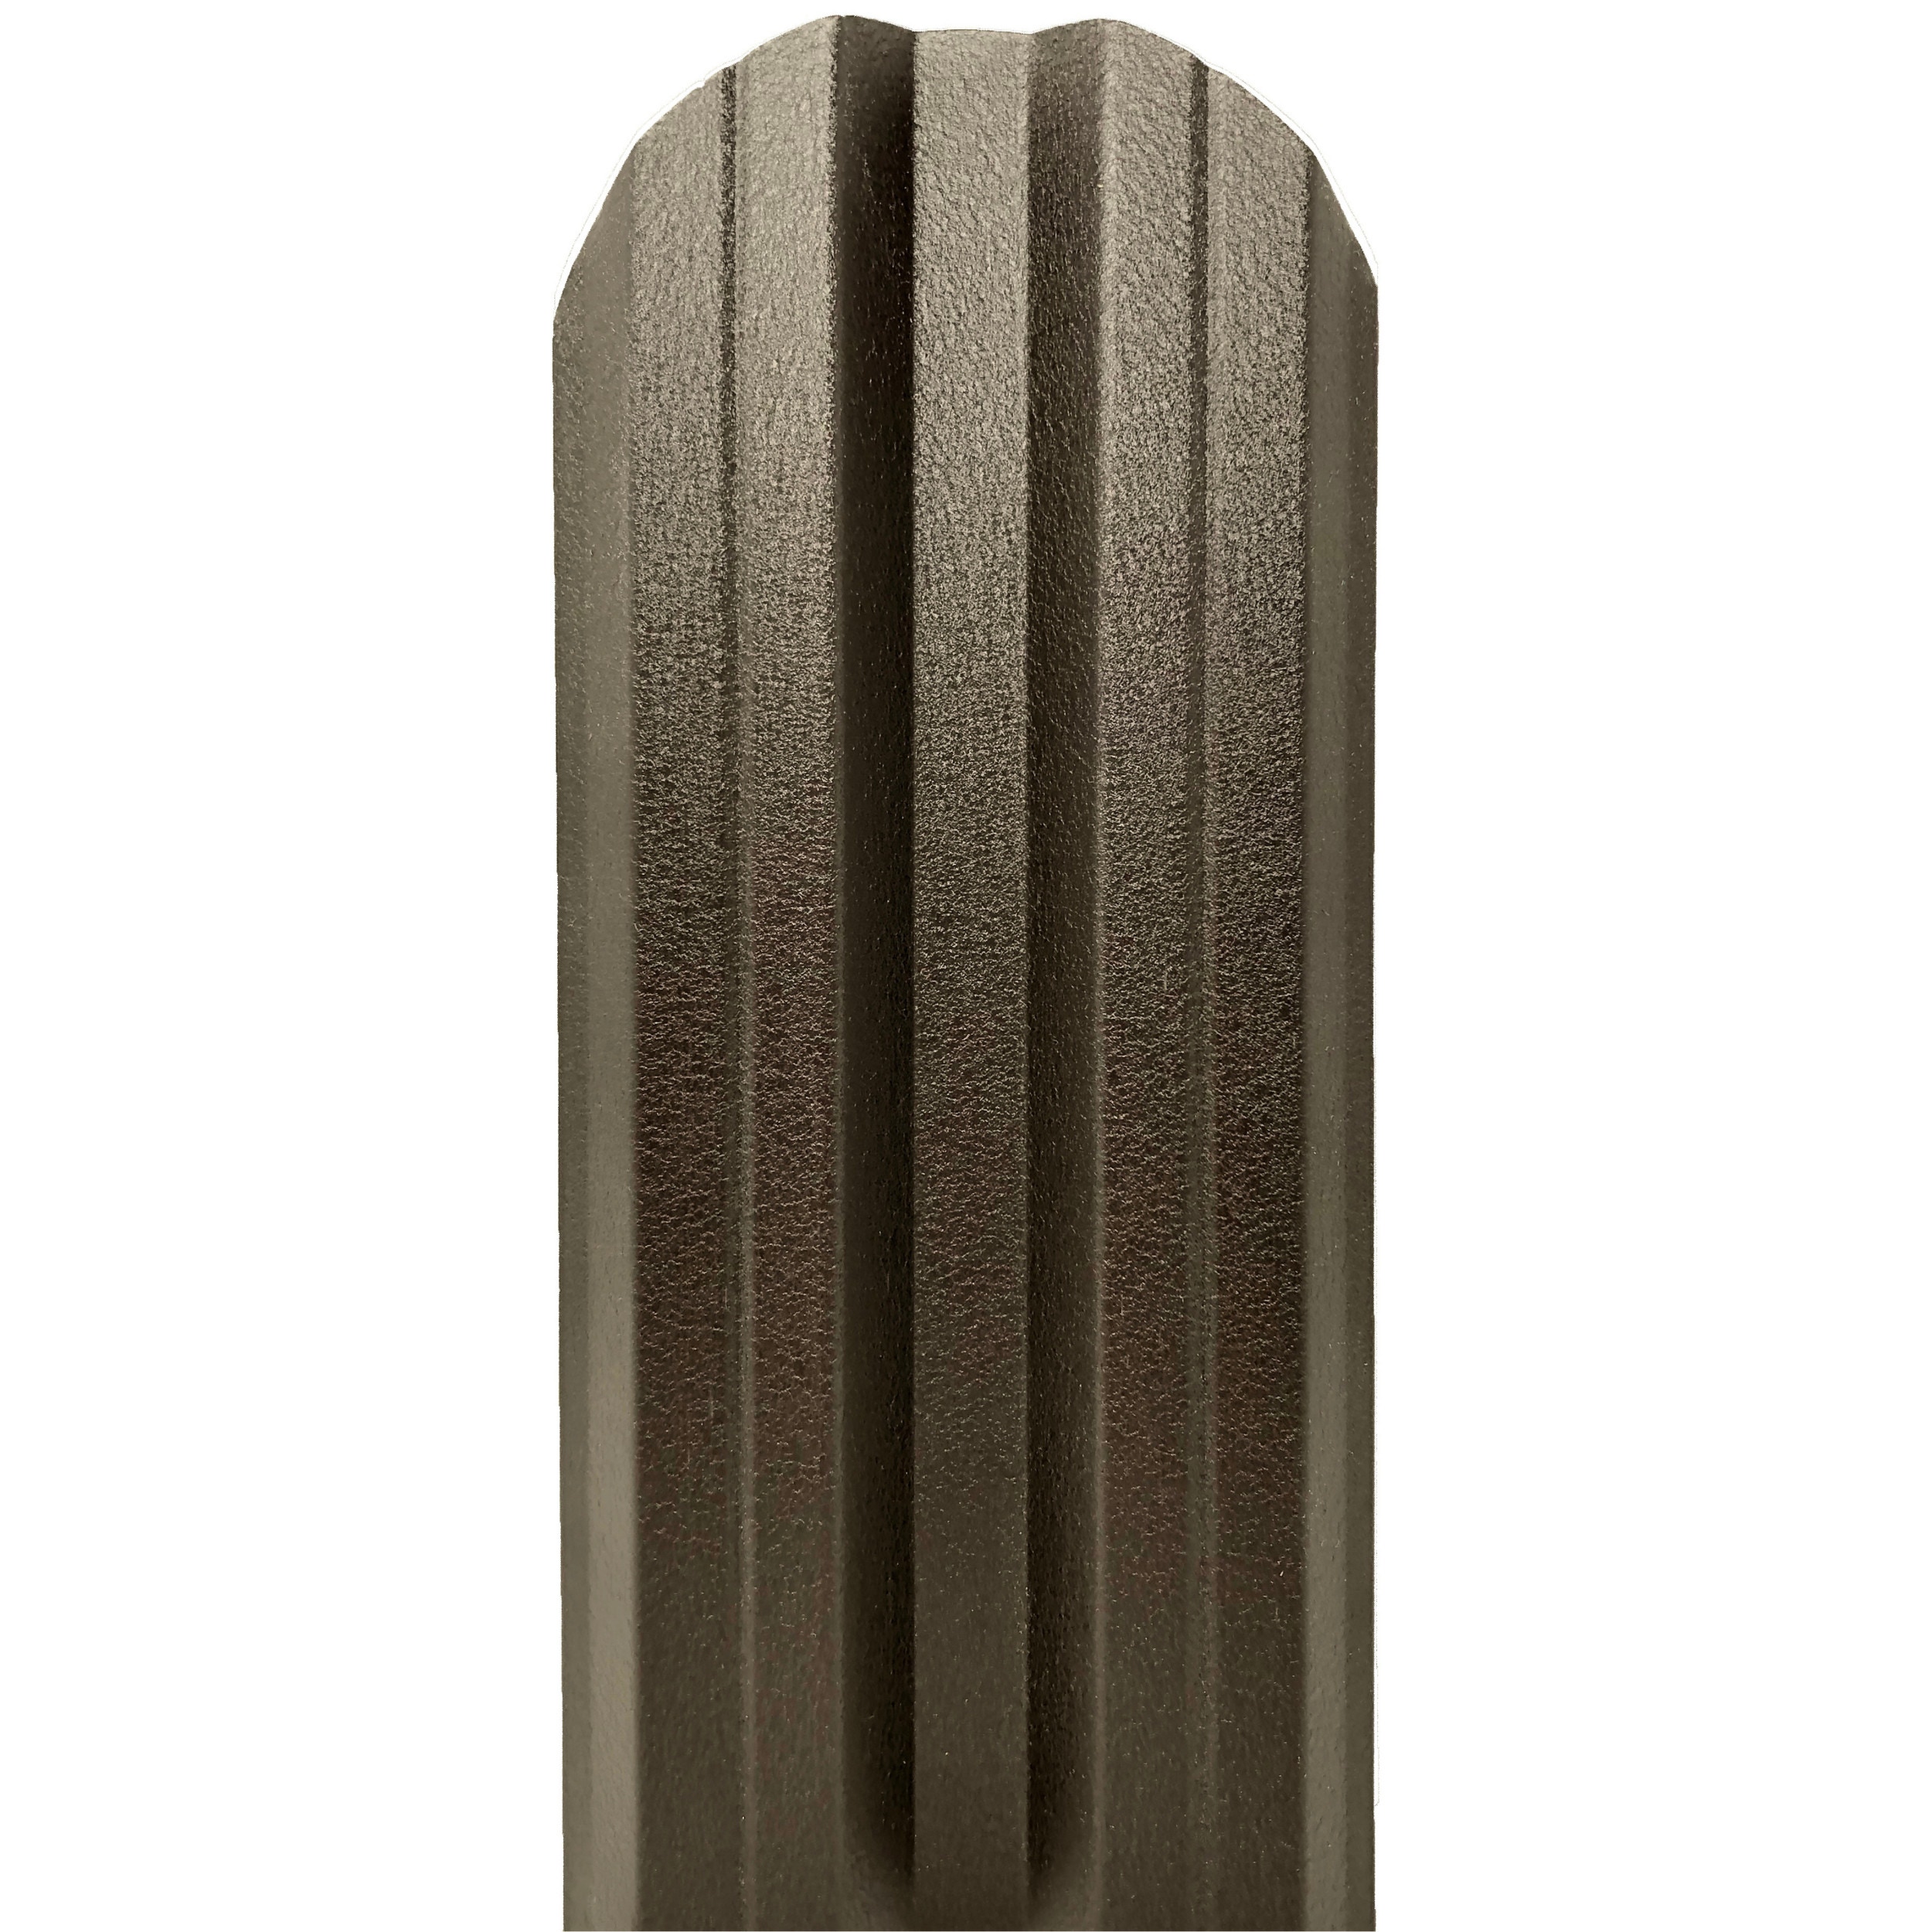 Sipca metalica cutata pentru gard, maro inchis / RAL 8019, 1200 x 115 x 0.45 mm, set 25 bucati + 50 bucati surub autoforant